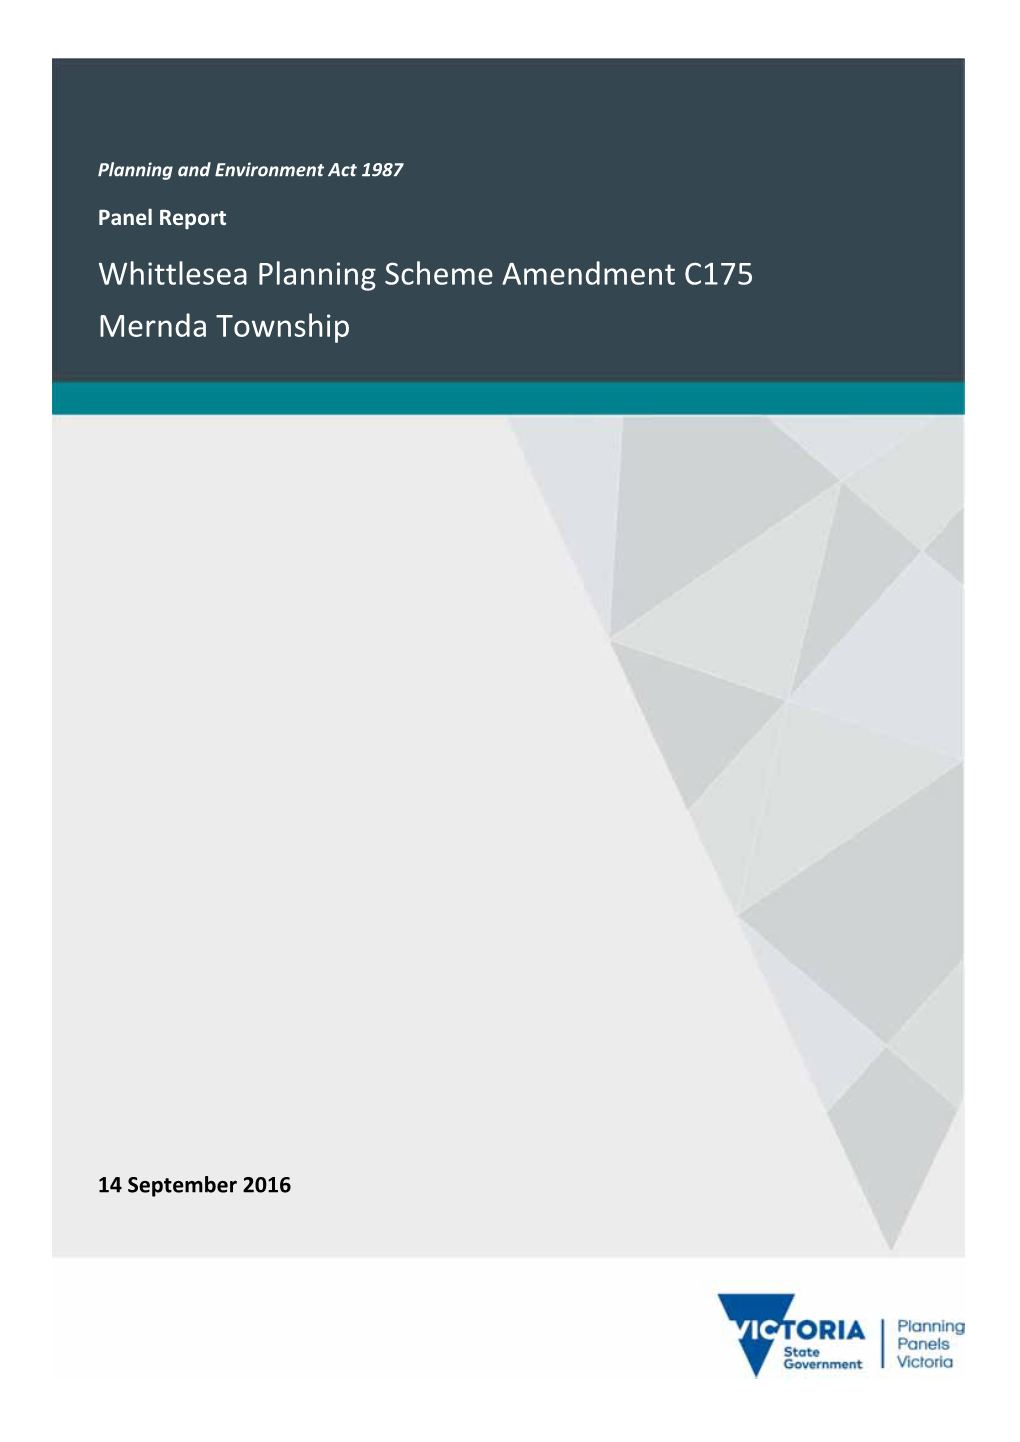 Whittlesea Planning Scheme Amendment C175 Mernda Township